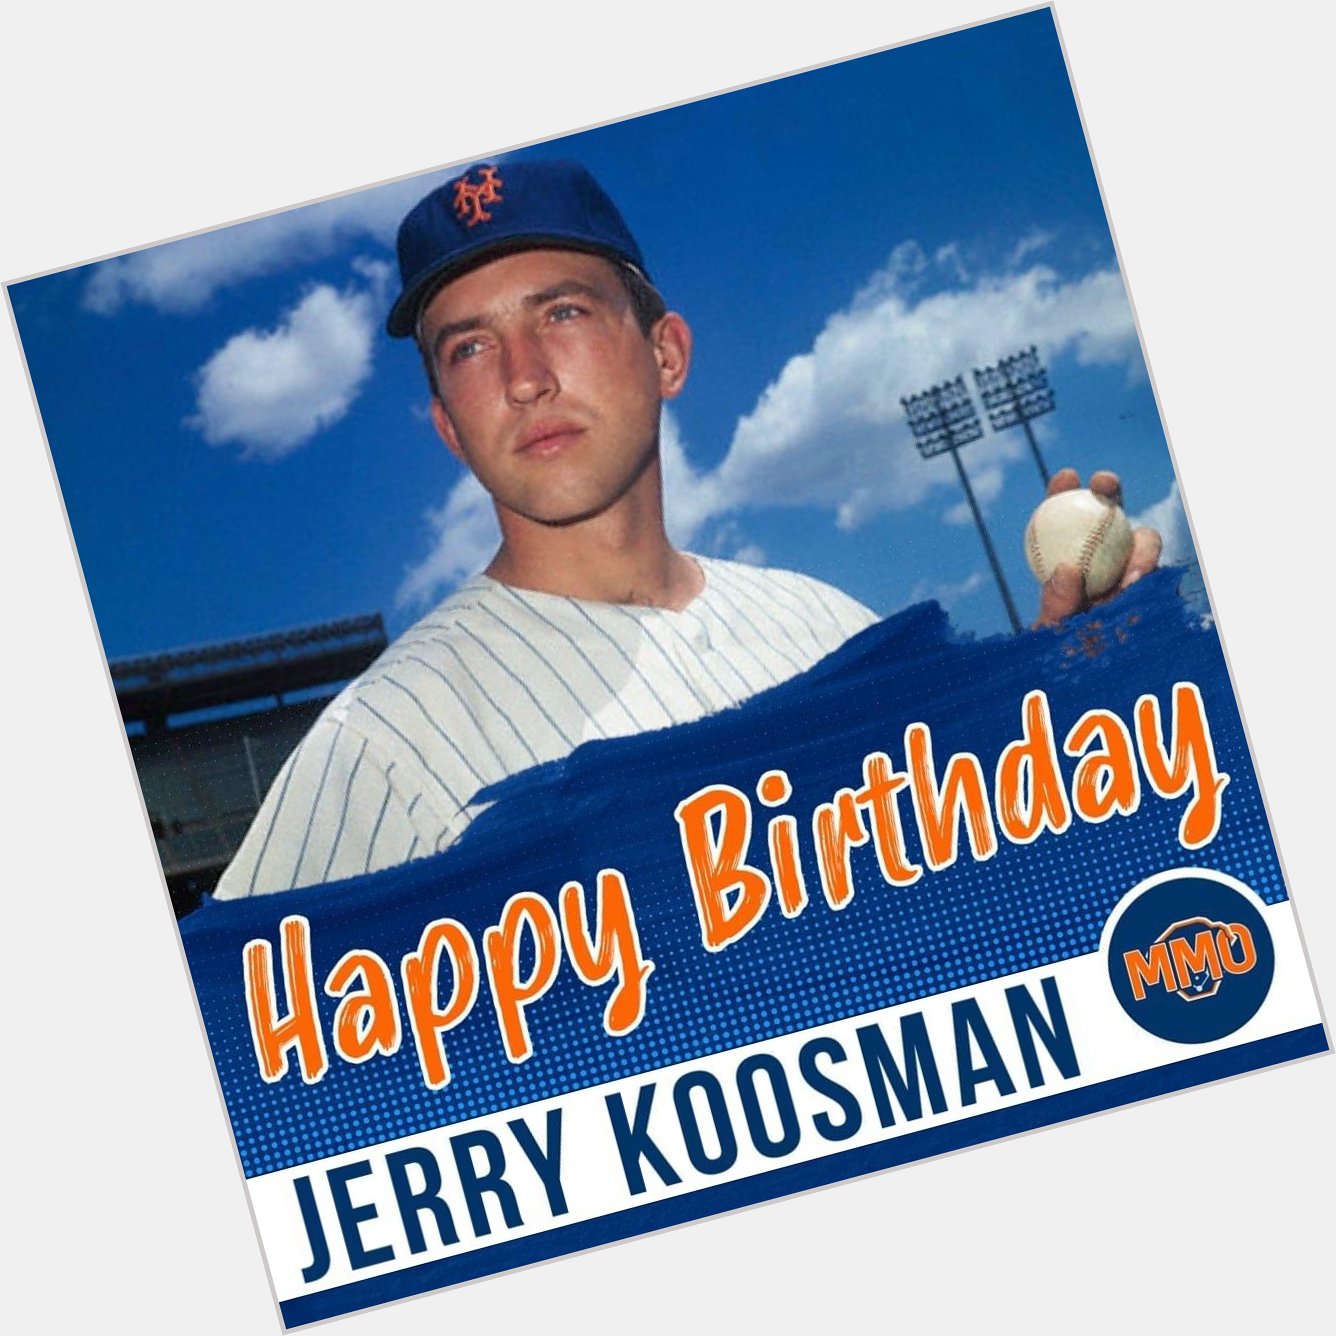 Happy birthday Jerry Koosman . One of my favorite lefties on 